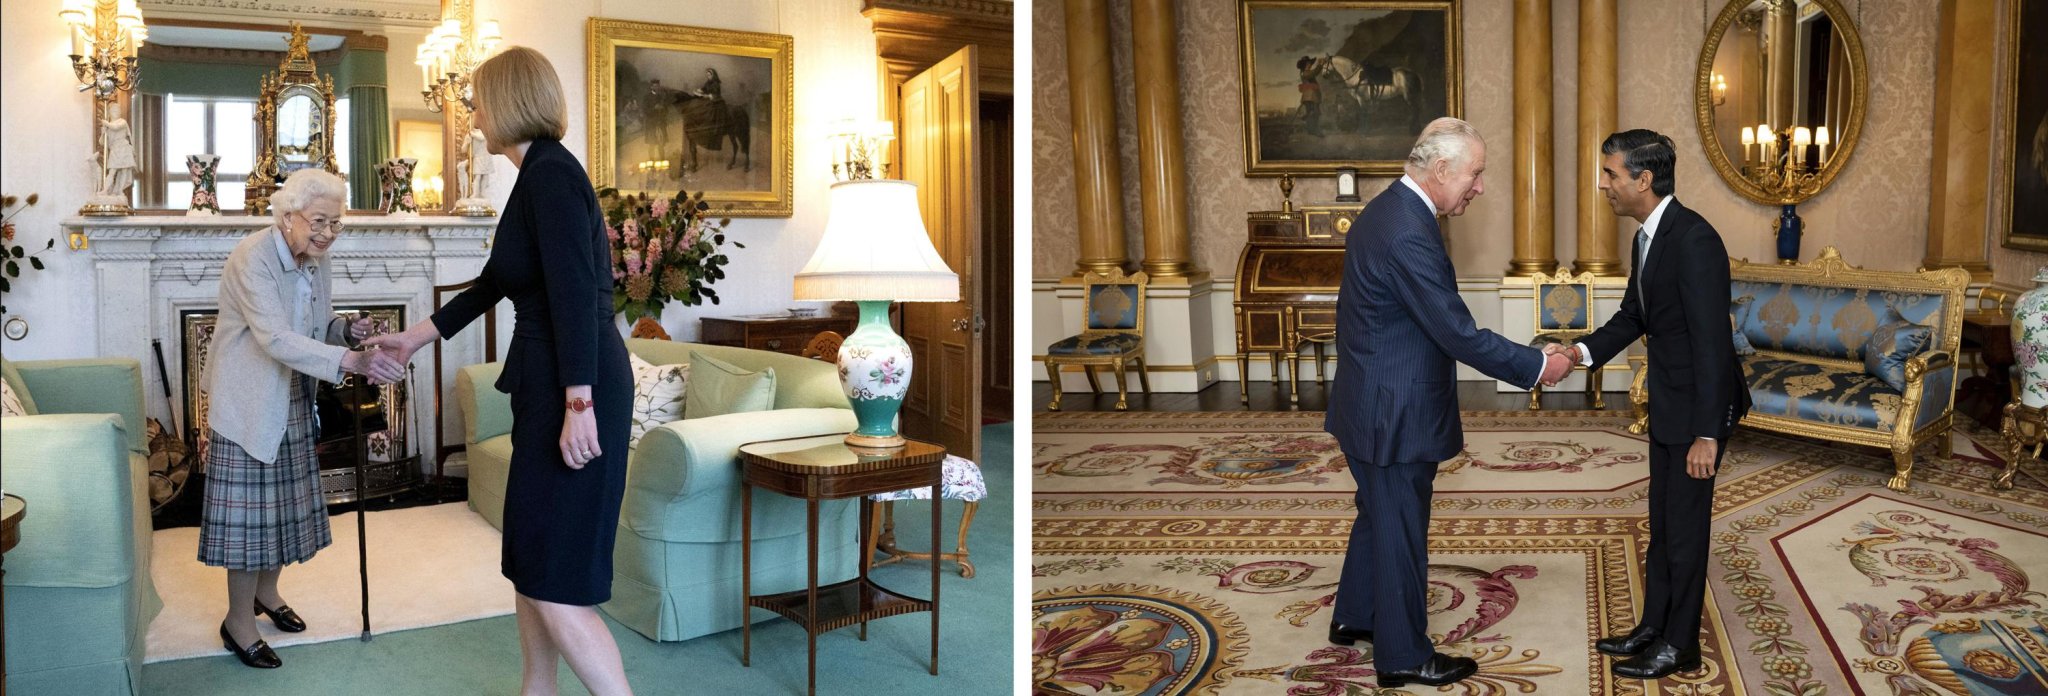 2 images of Britain, taken 7 weeks apart, that speak volumes